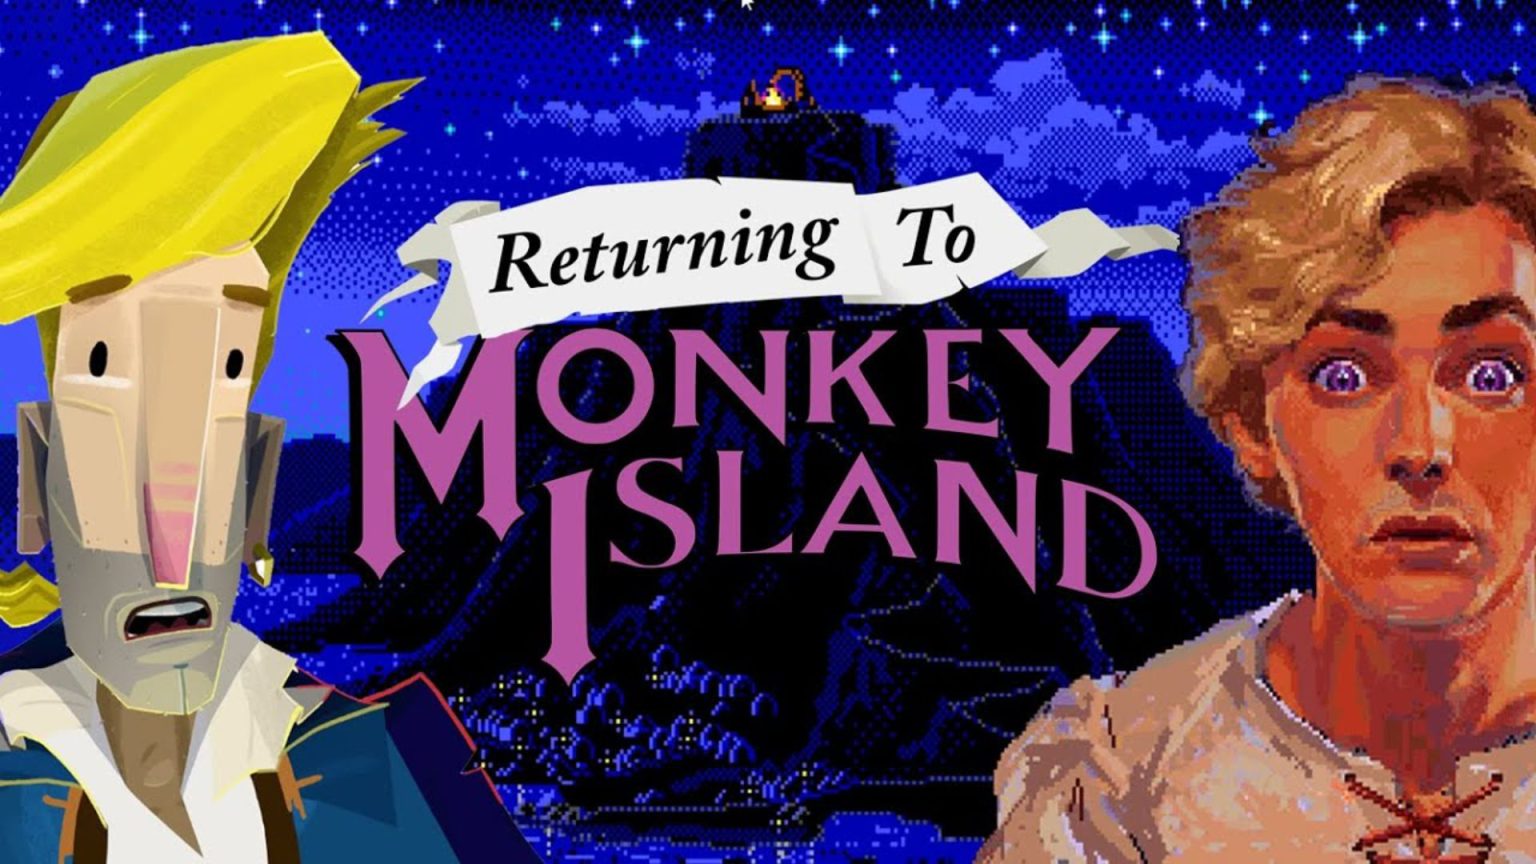 noclip Return to Monkey Island